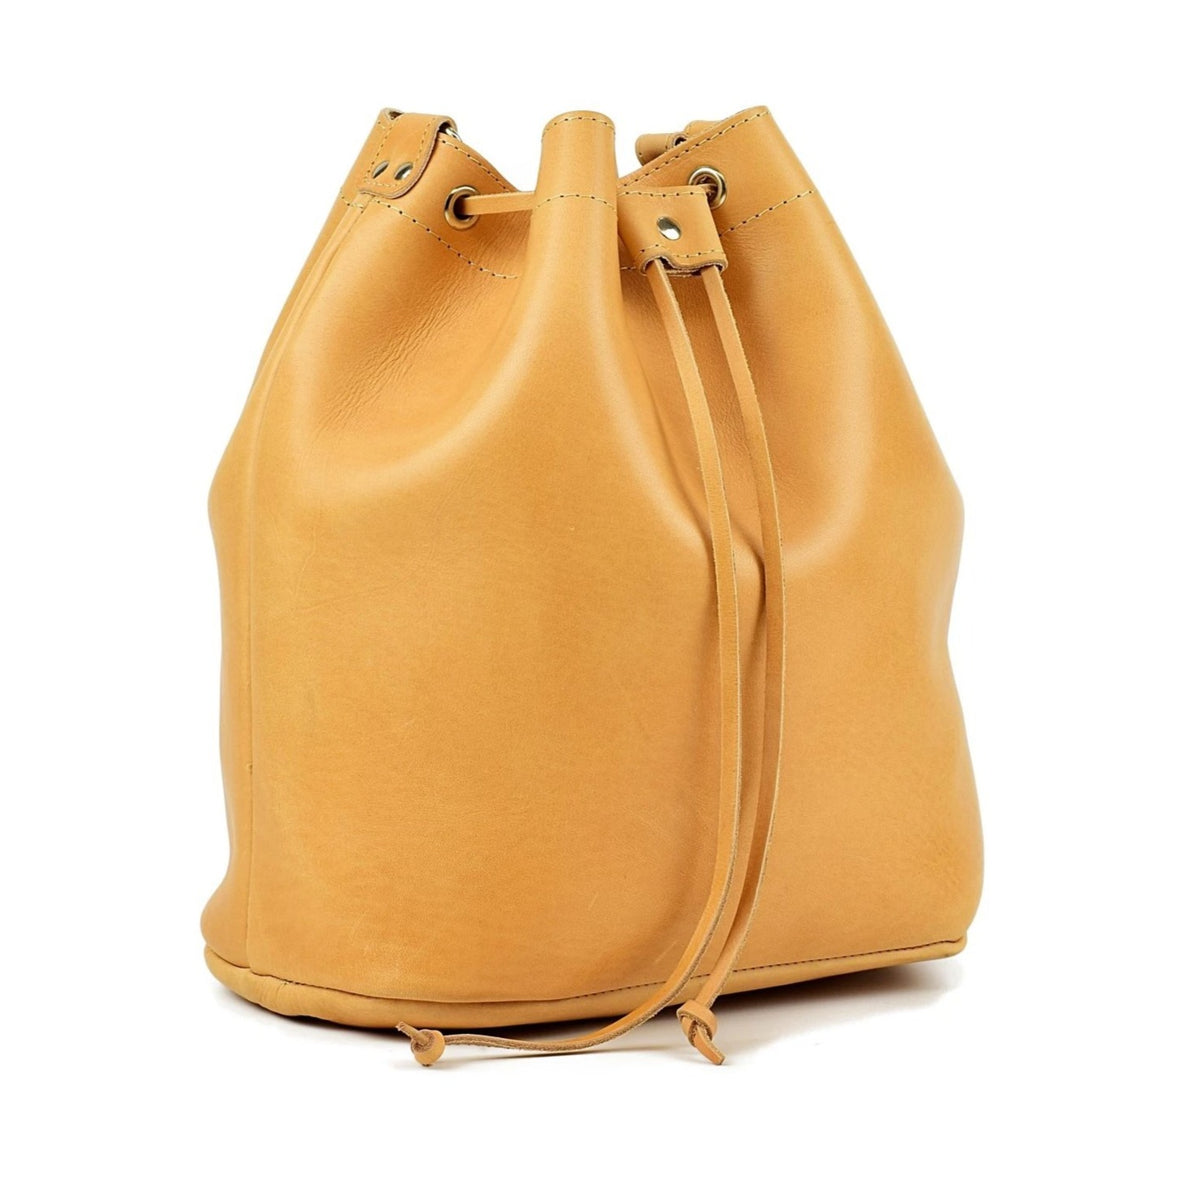 Strathberry Leather Bucket Bag - Brown Bucket Bags, Handbags - STRAT21289